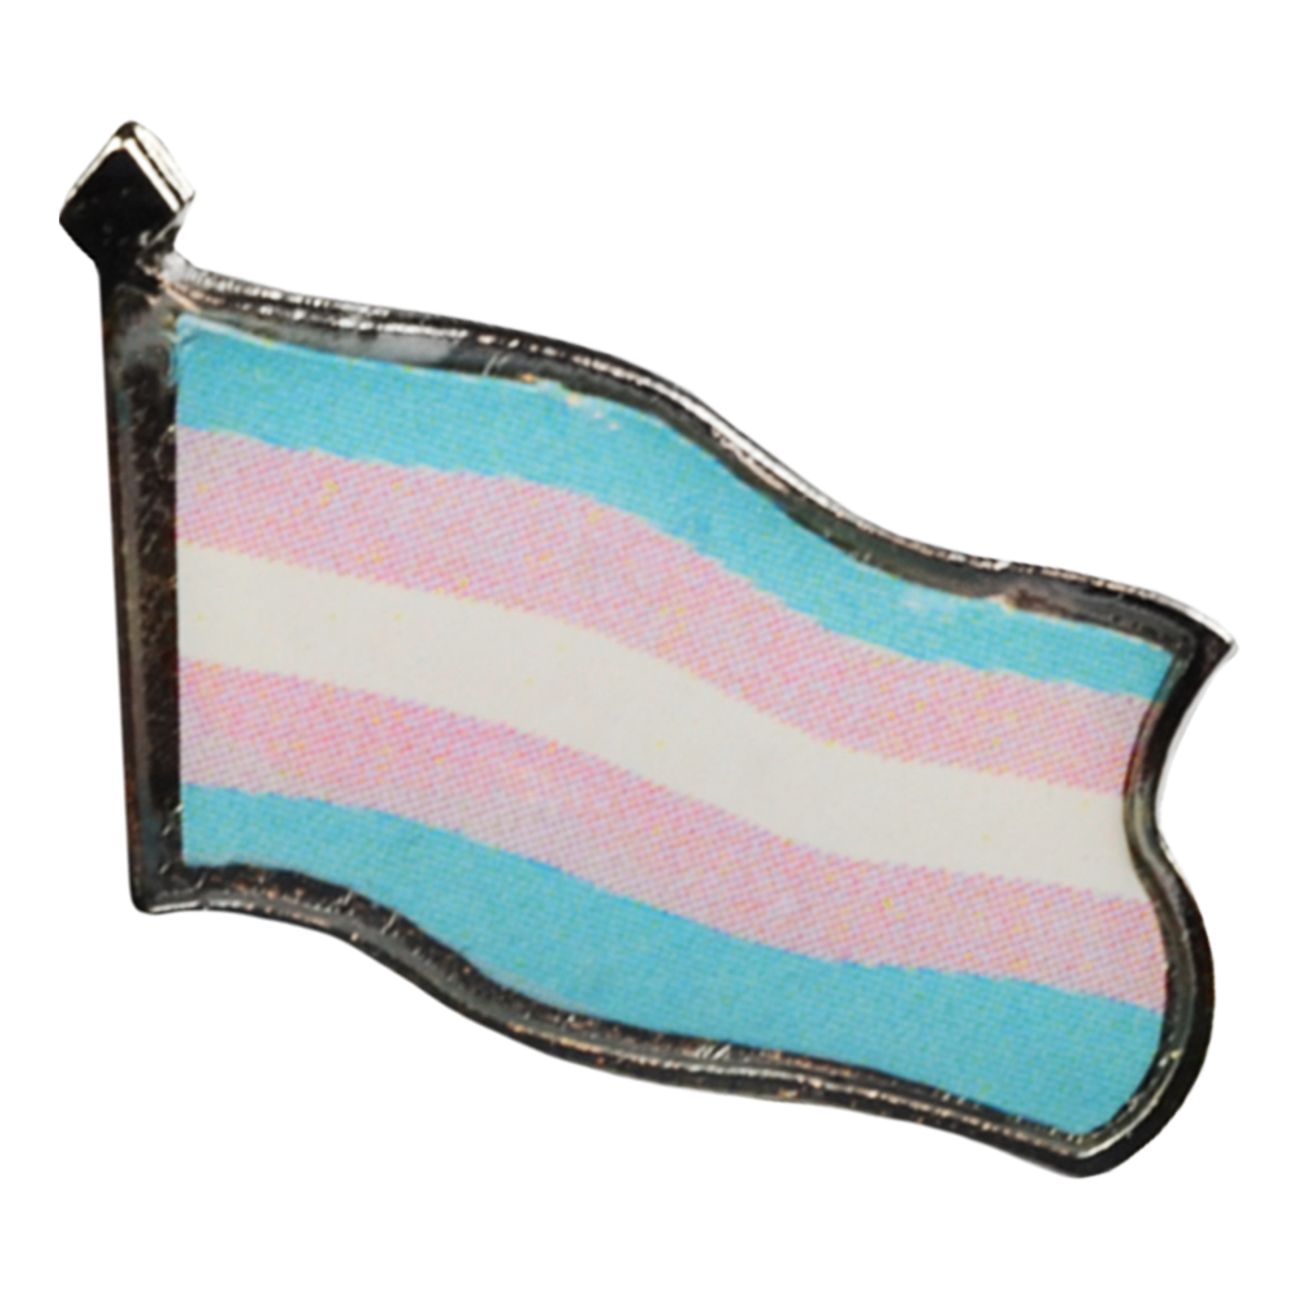 pinflagga-pride-trans-96116-1